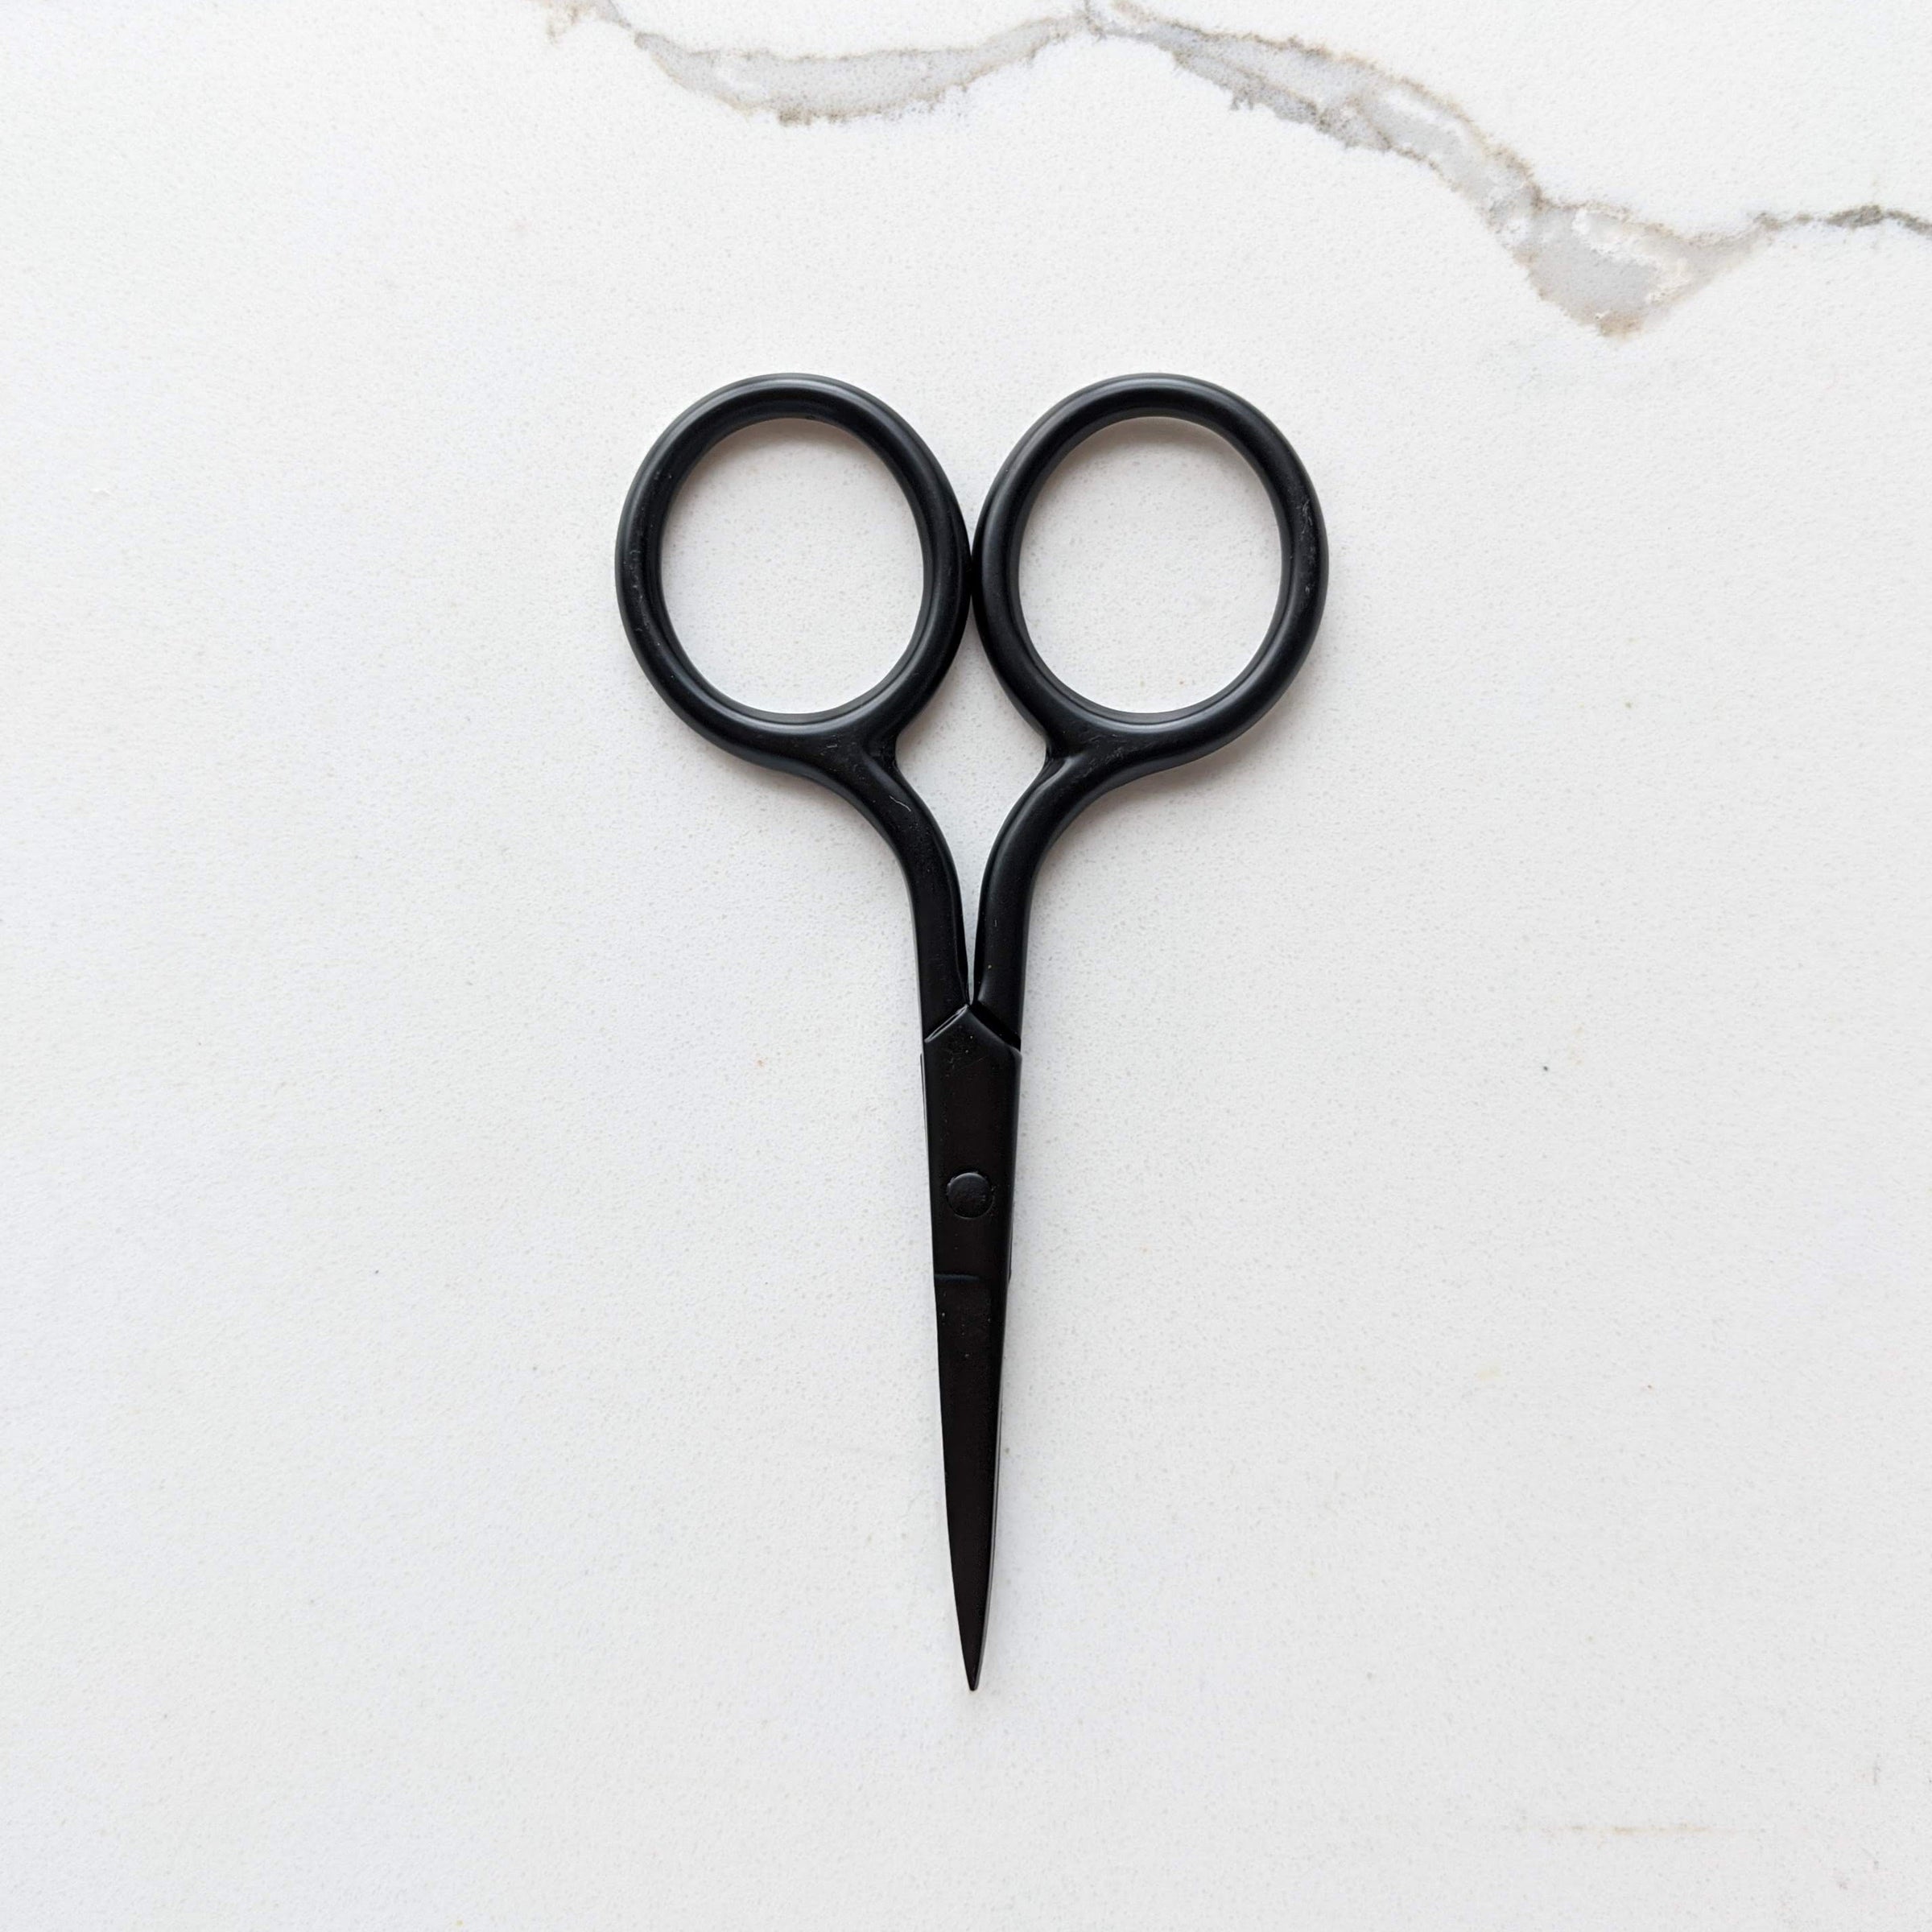 Fine Italian Made Embroidery Scissors